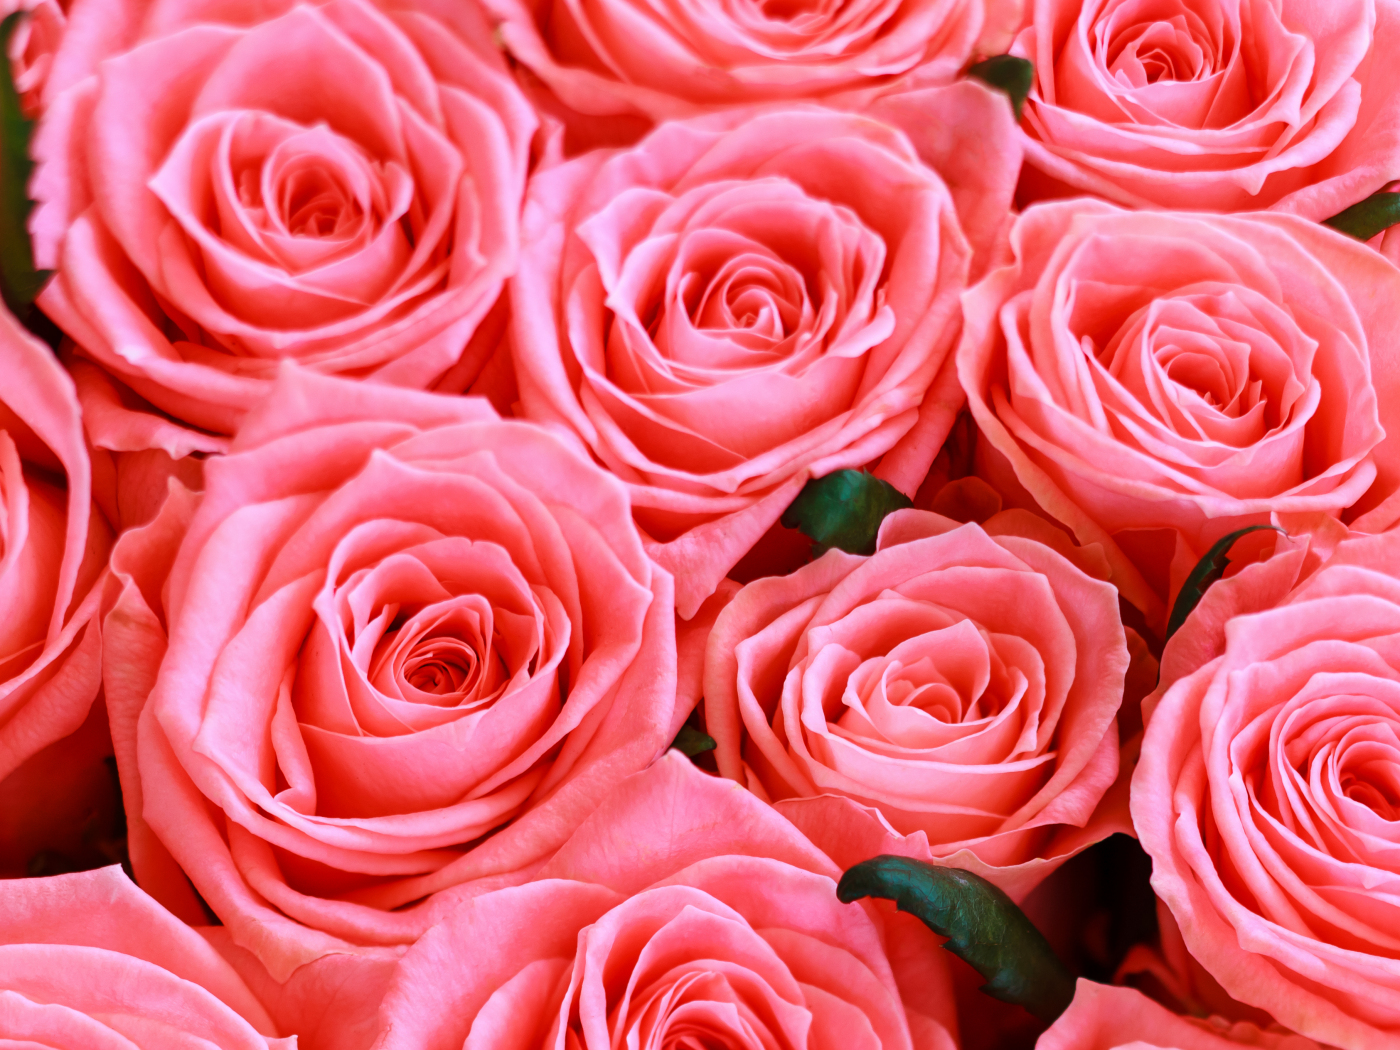 Download wallpaper 1400x1050 fresh pink roses, flowers, standard 4:3  fullscreen 1400x1050 hd background, 26535